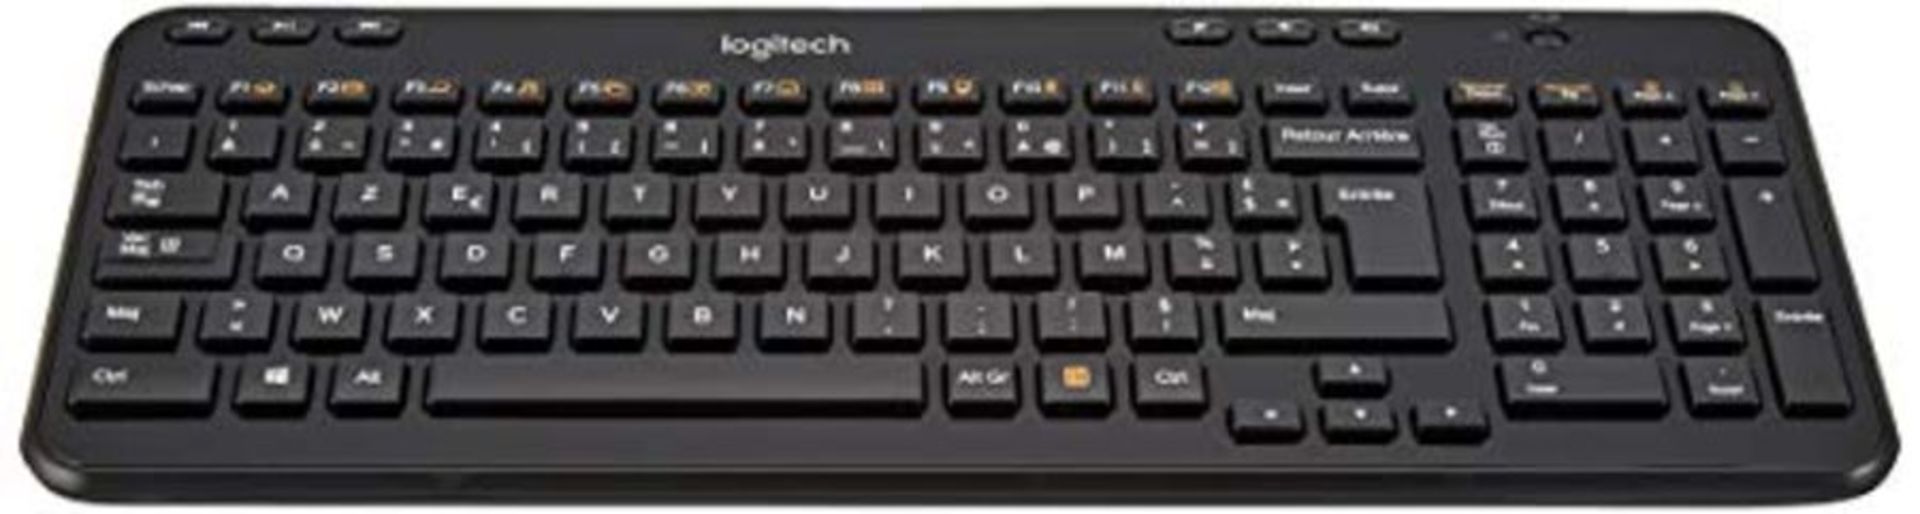 Logitech K360 Compact Wireless Keyboard for Windows, AZERTY French Layout - Black